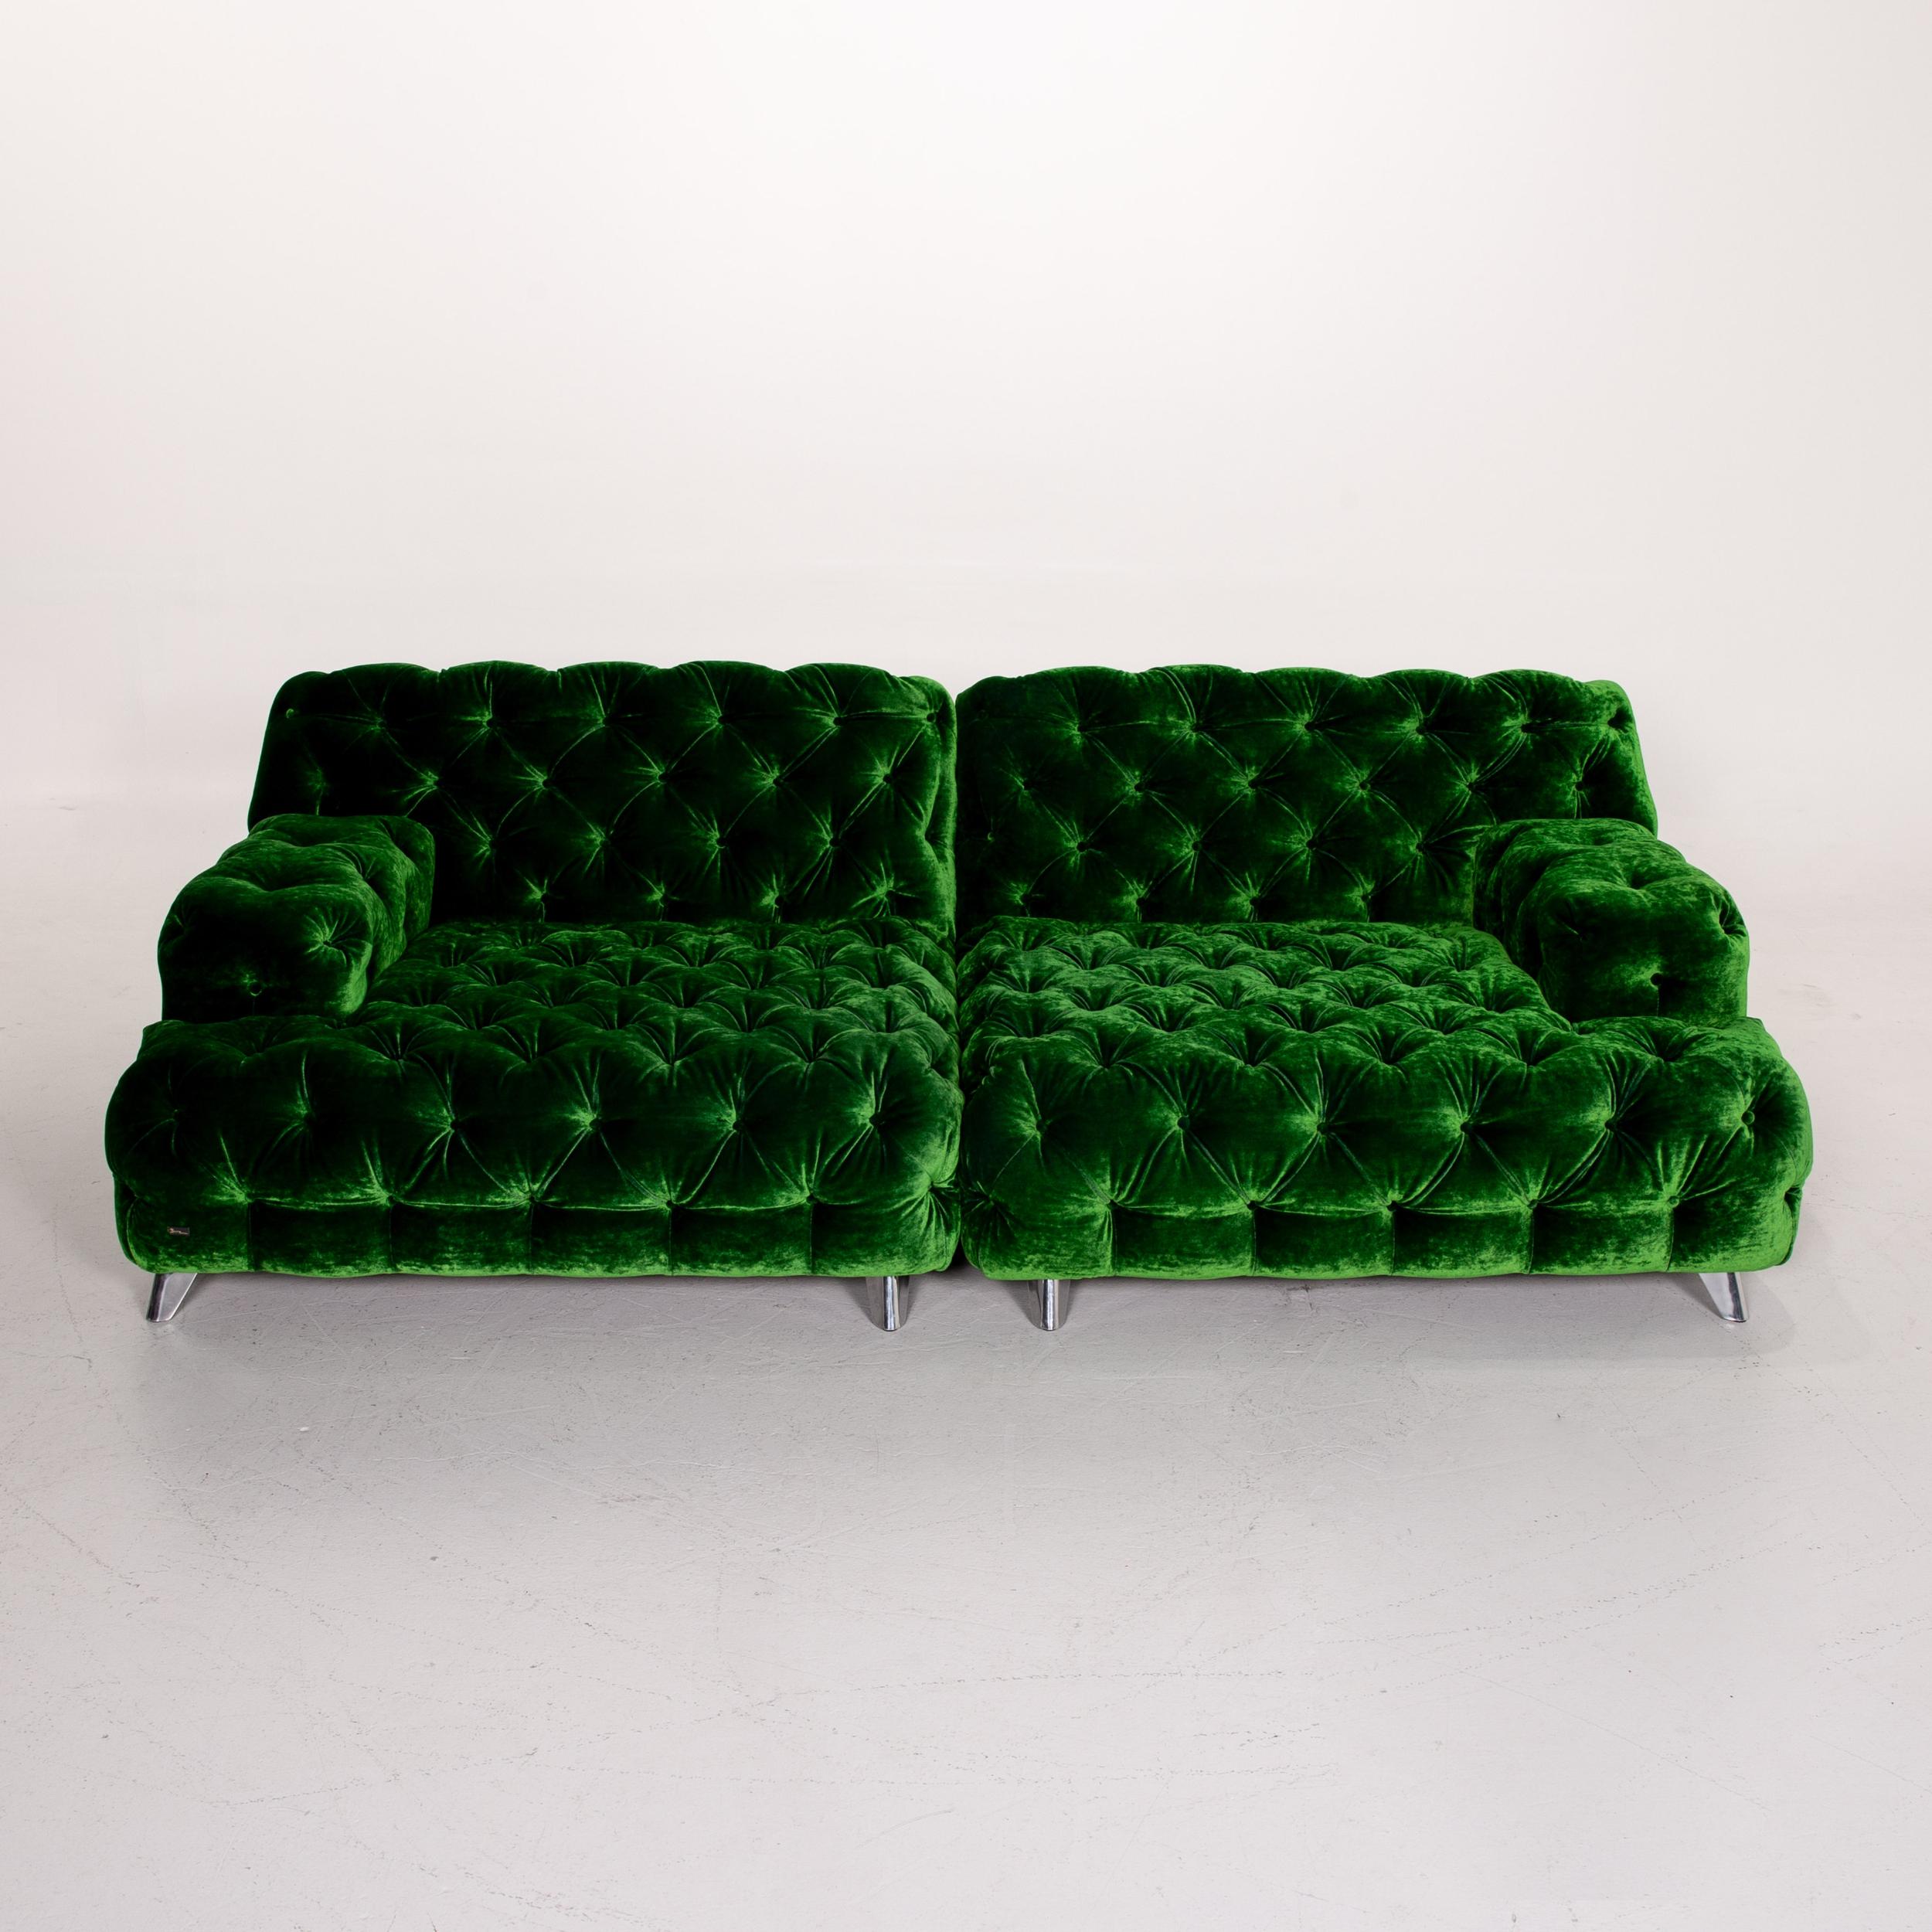 Bretz Cocoa Island Velvet Fabric Sofa Green Four-Seat Couch 1